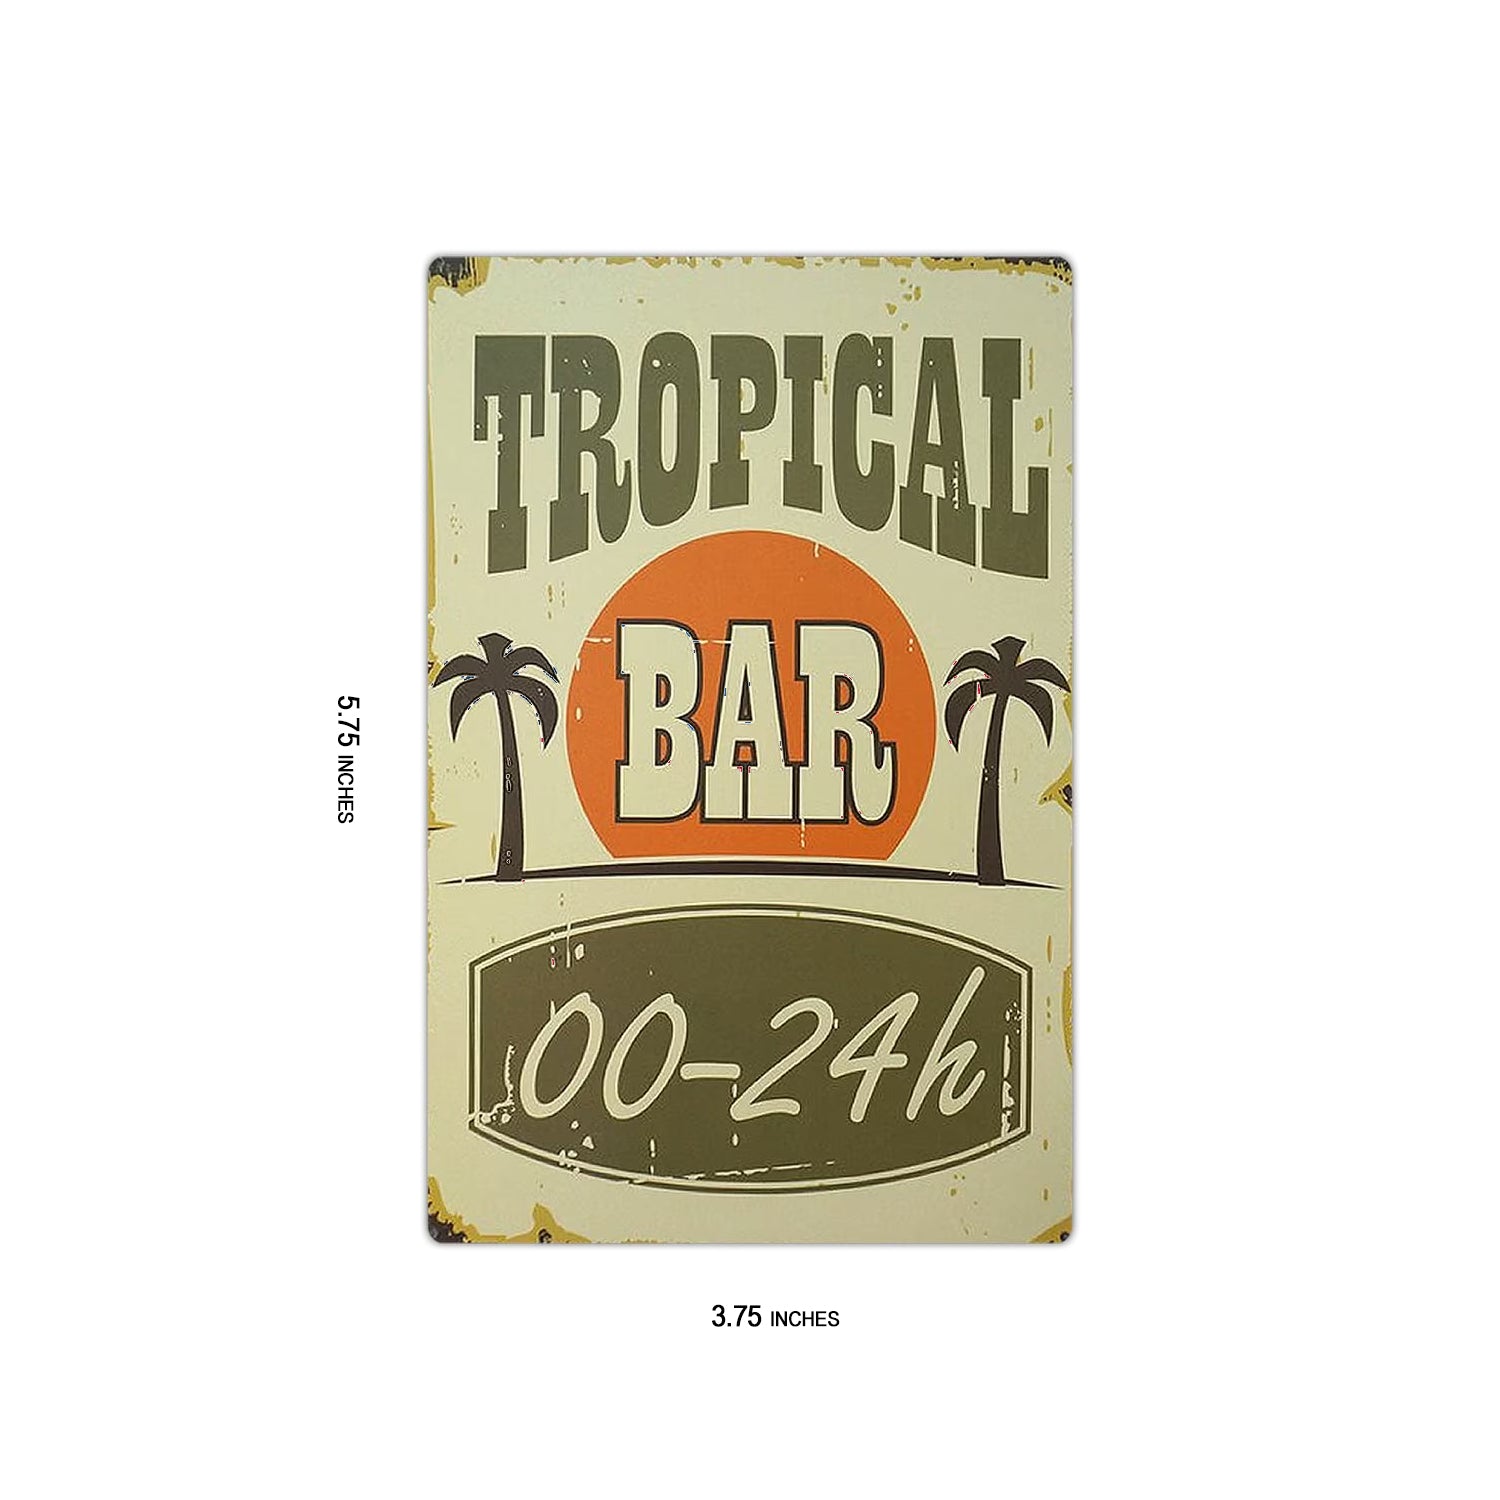 Bar Themed Fridge Magnet - Tropical Bar print on 4x6 magnet dimensions